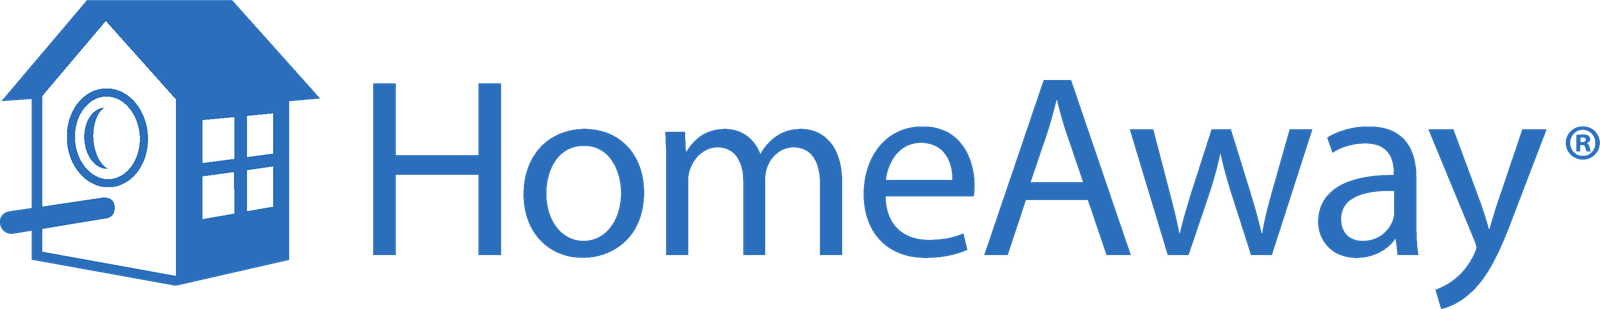 comapny logo